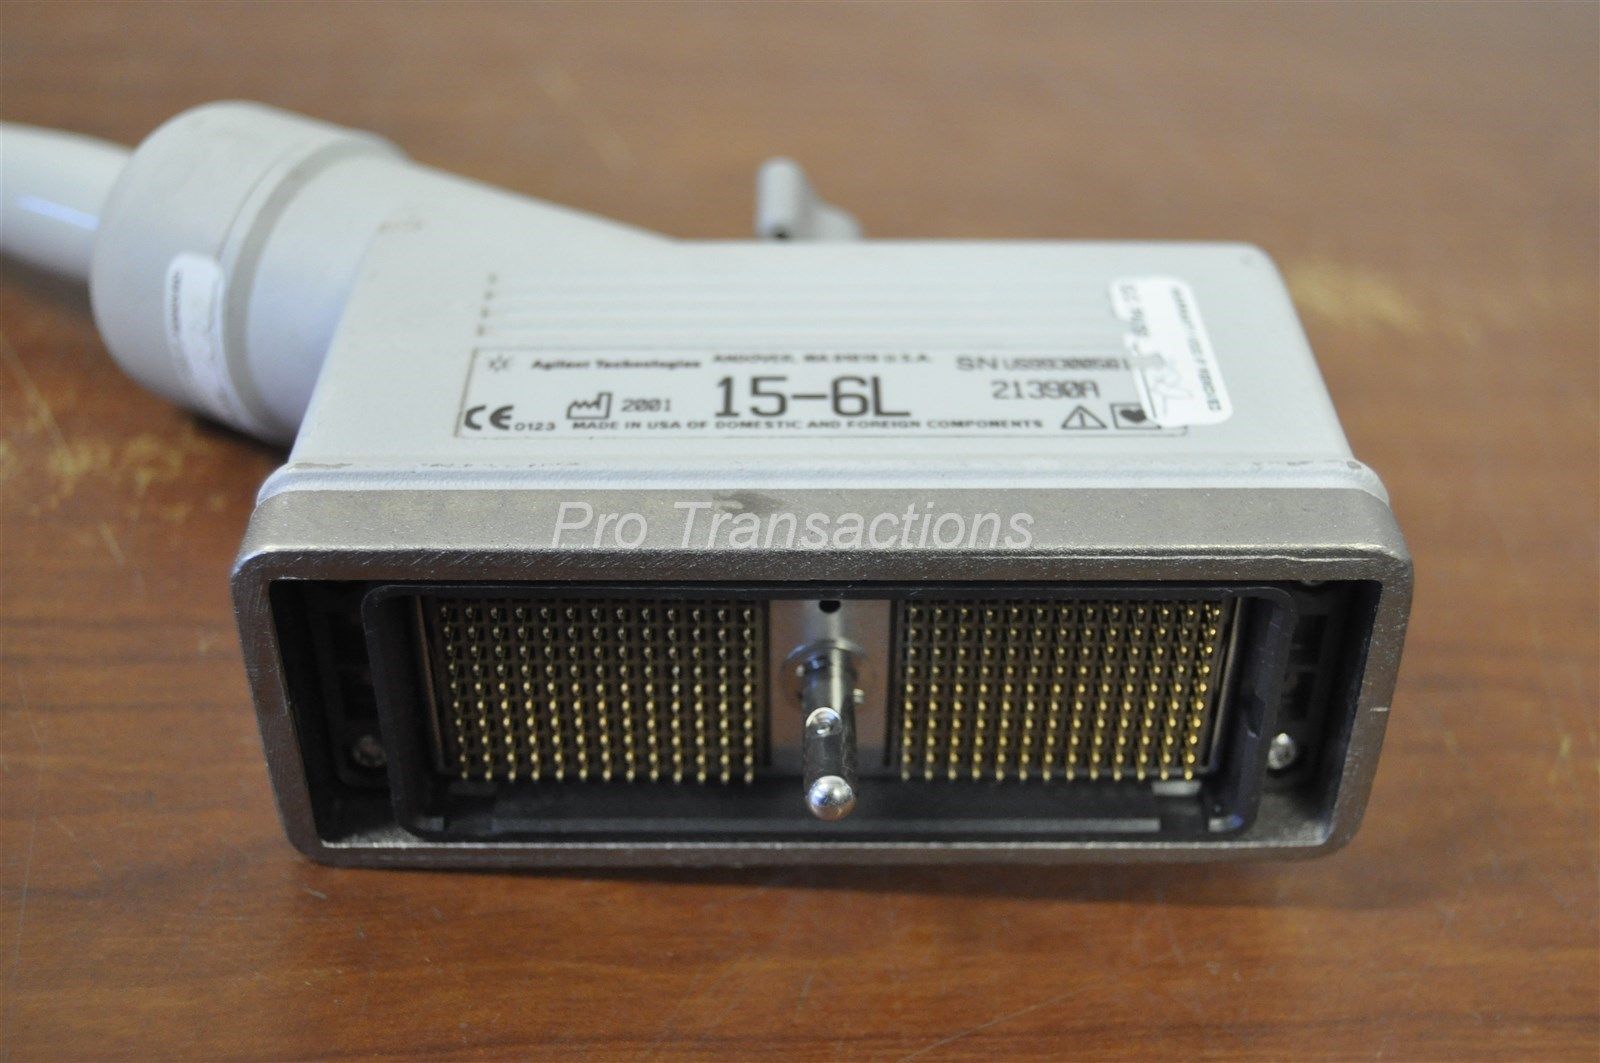 Agilent HP 15-6L 21390A Ultrasound Transducer Probe